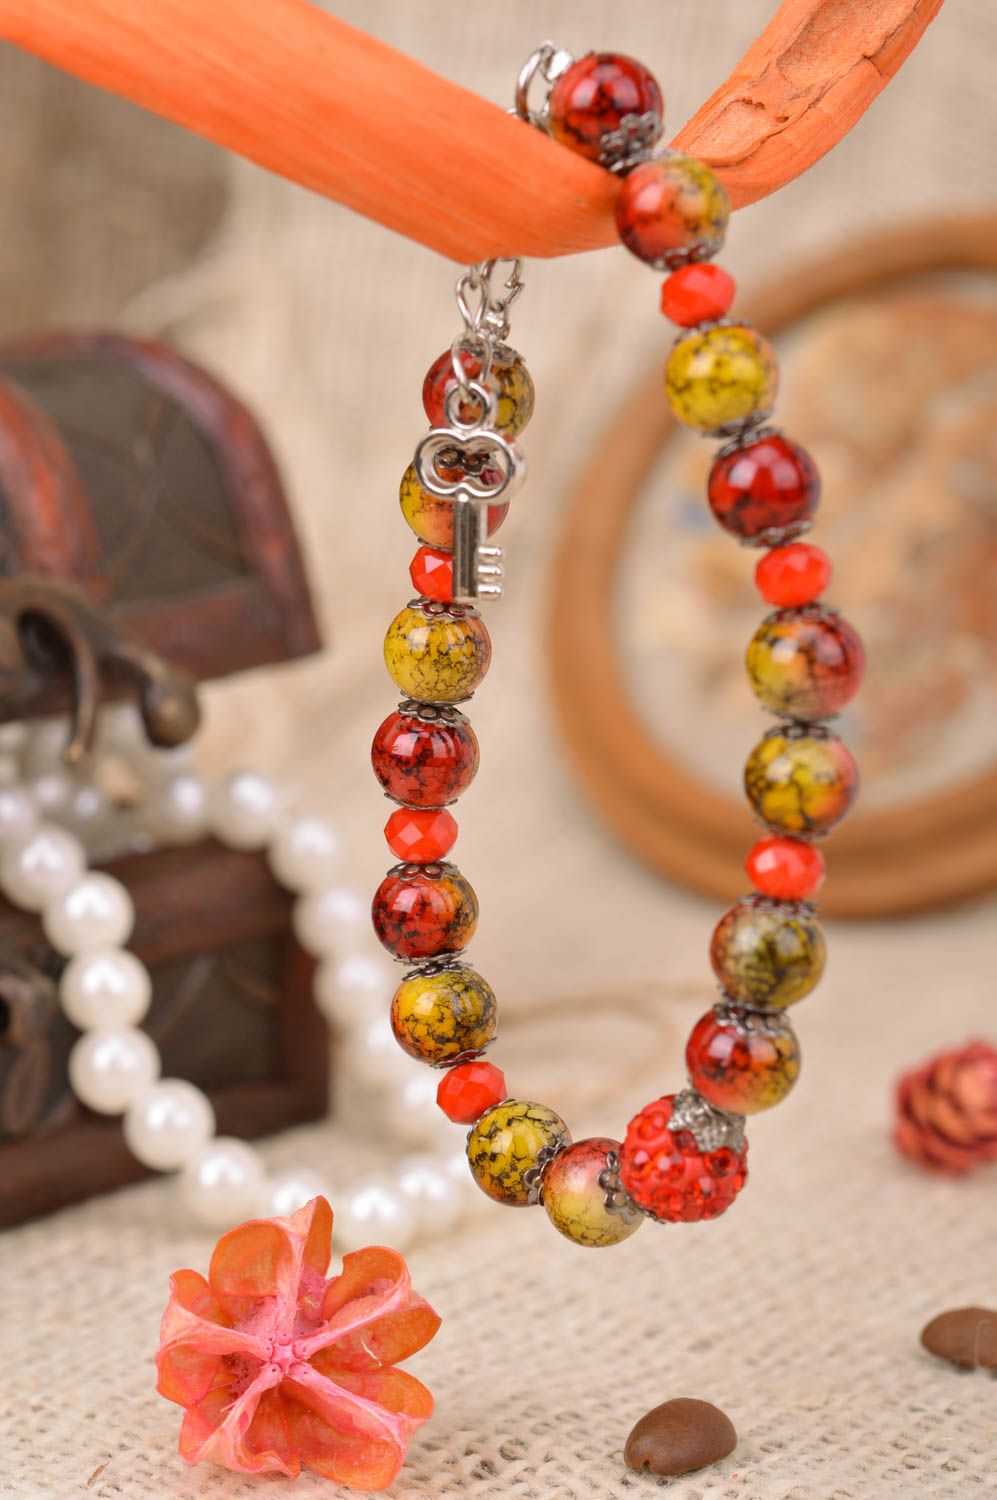 Handmade colorful glass bead wrist bracelet with metal charm key for women photo 1